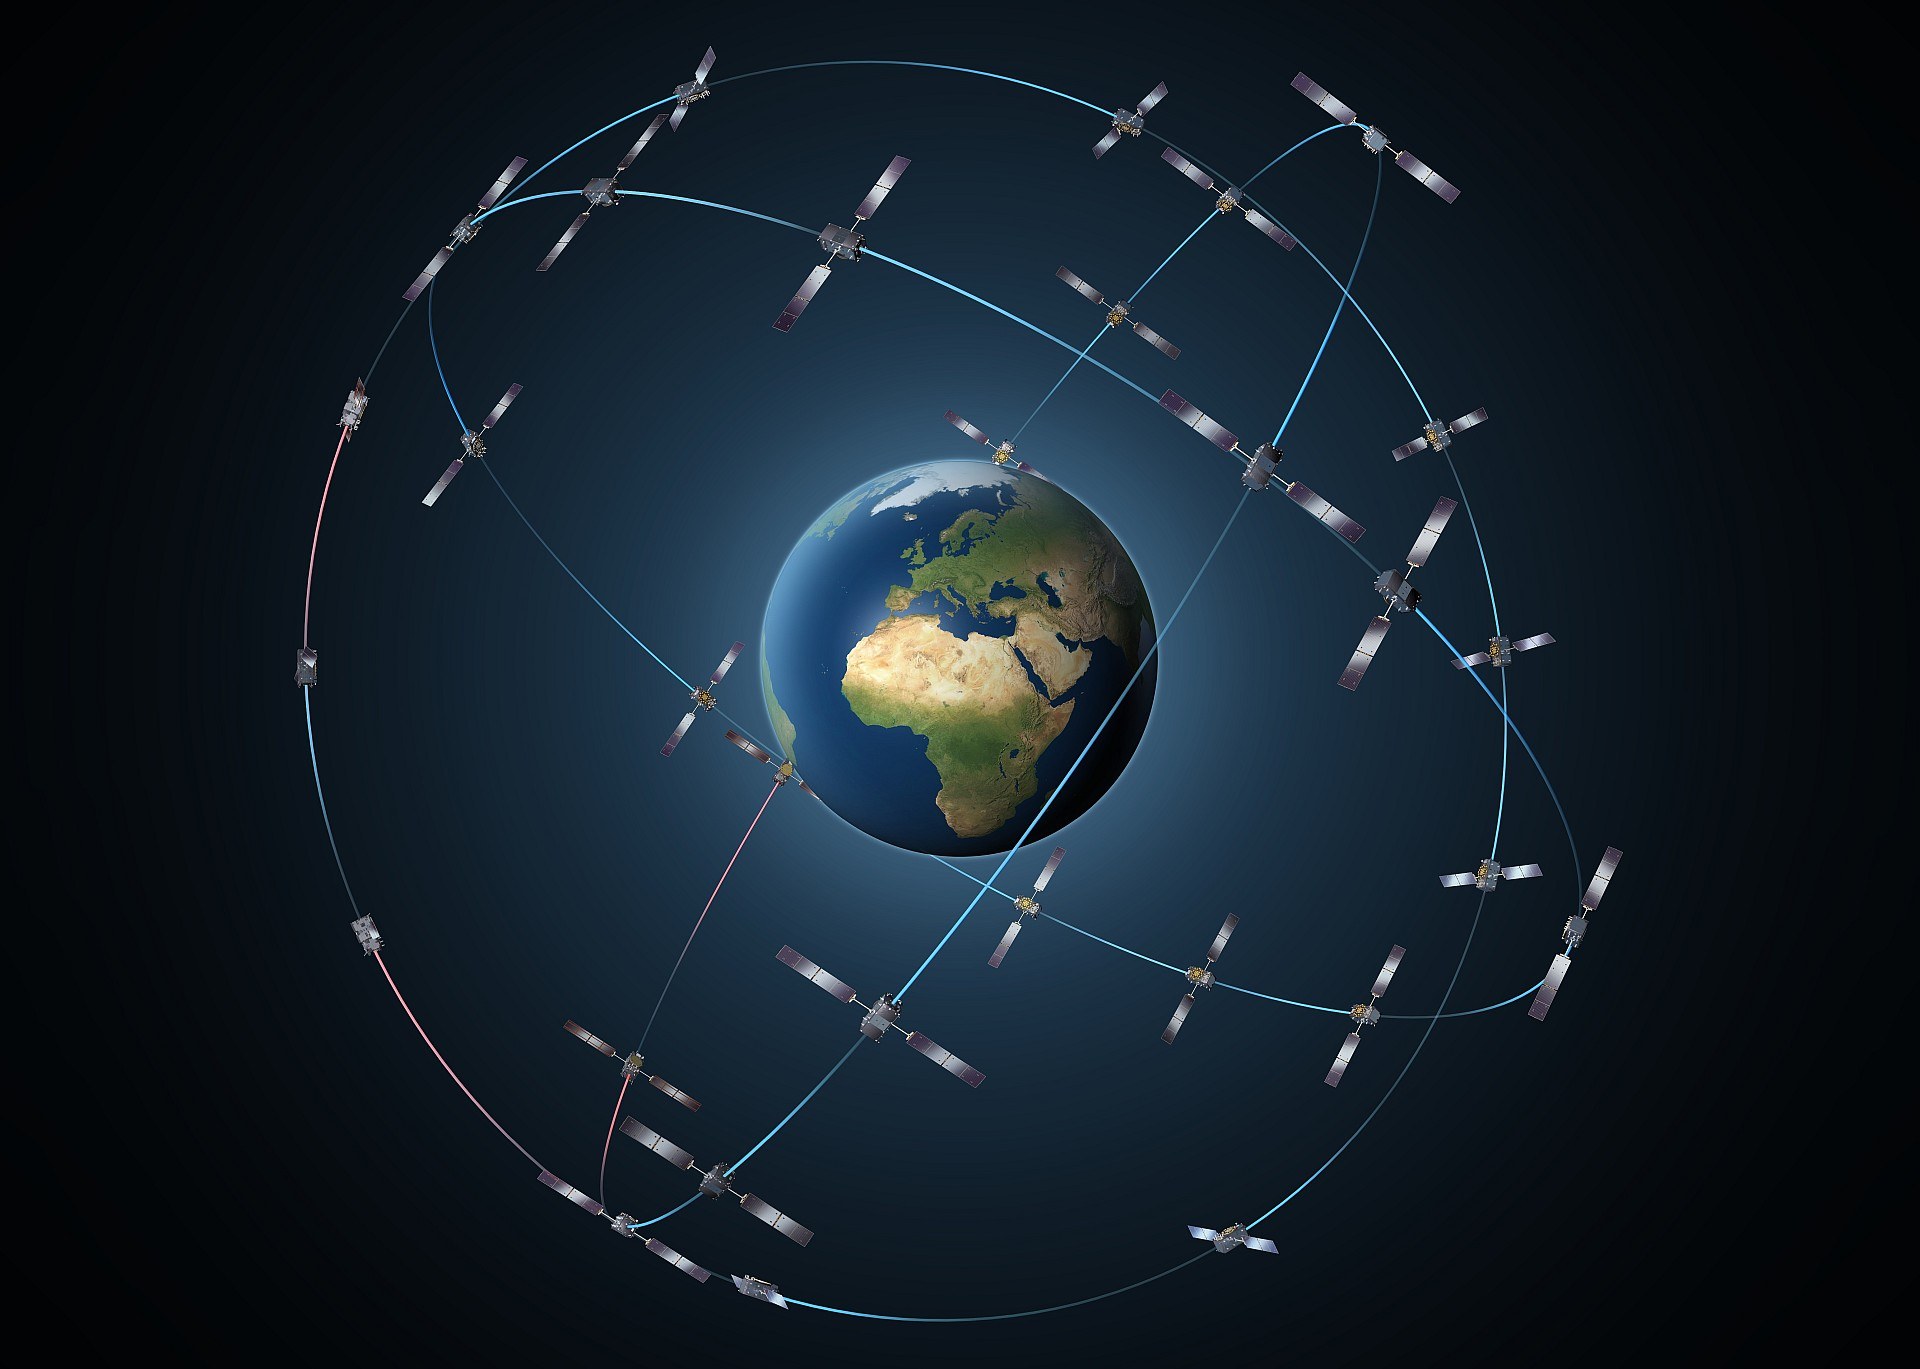 The Galileo satellite constellation